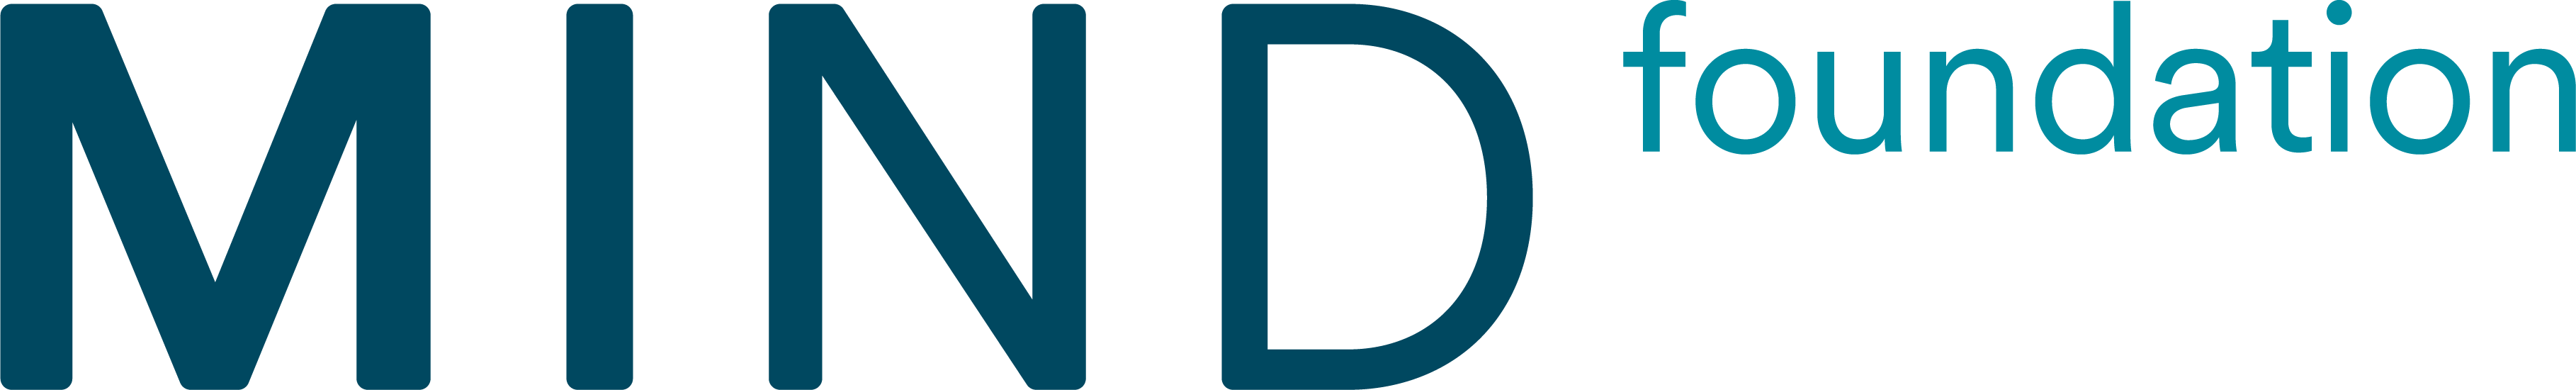 MIND Foundation Logo - right